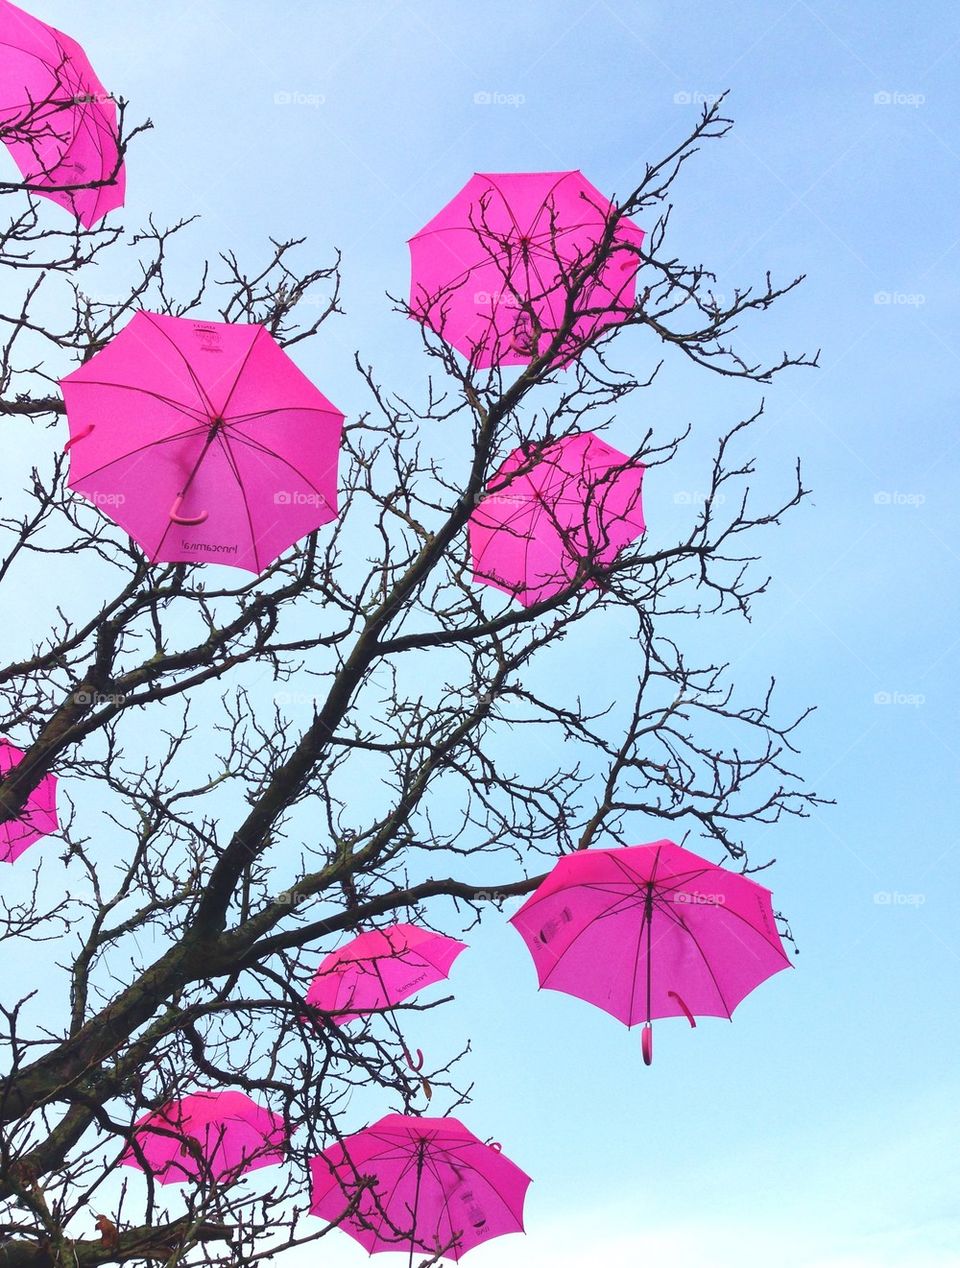 Umbrella tree.